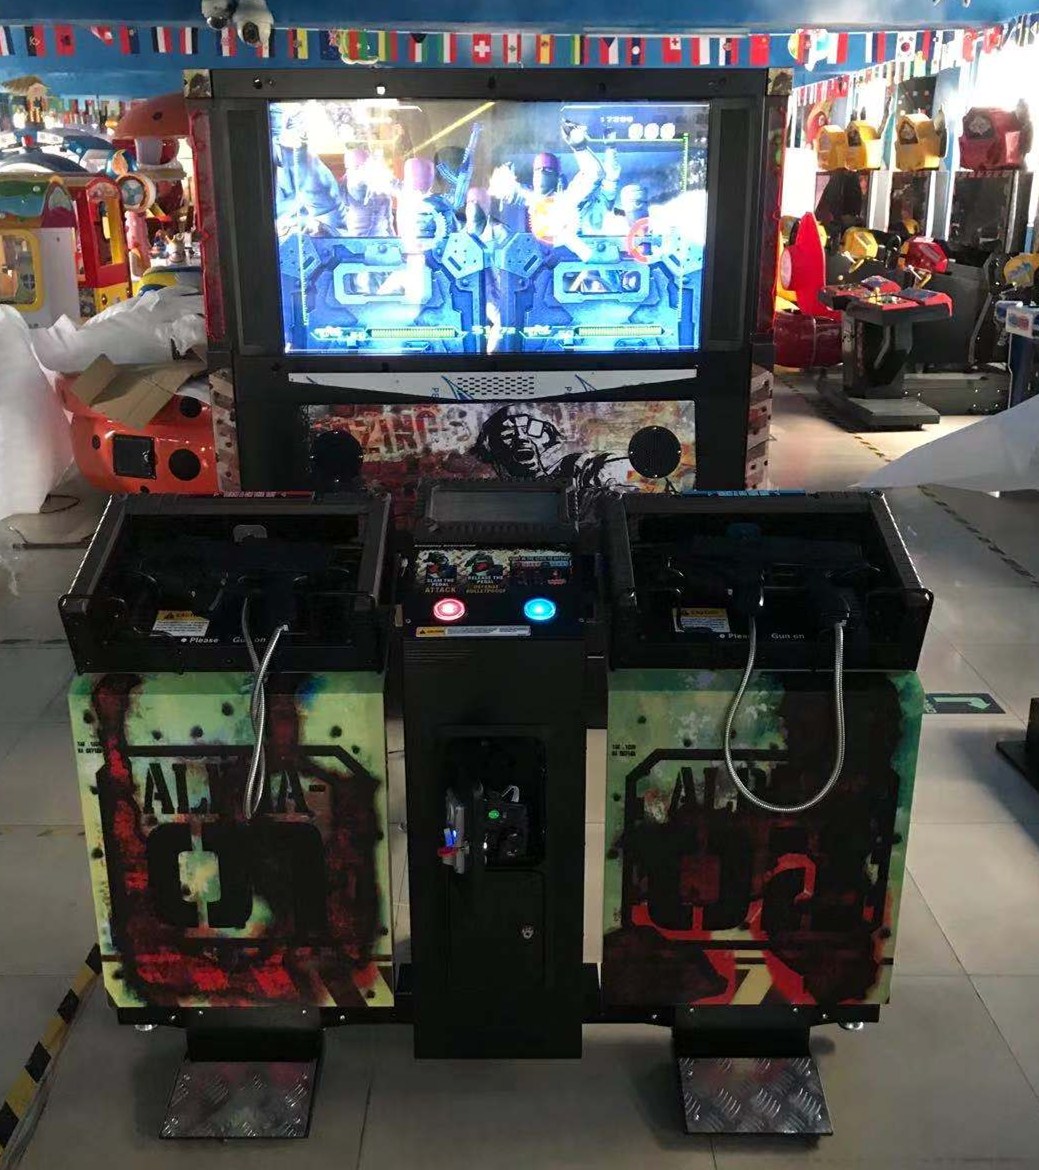 High quality indoor amusement coin operated Simulator gun razing storm shooting arcade game machine